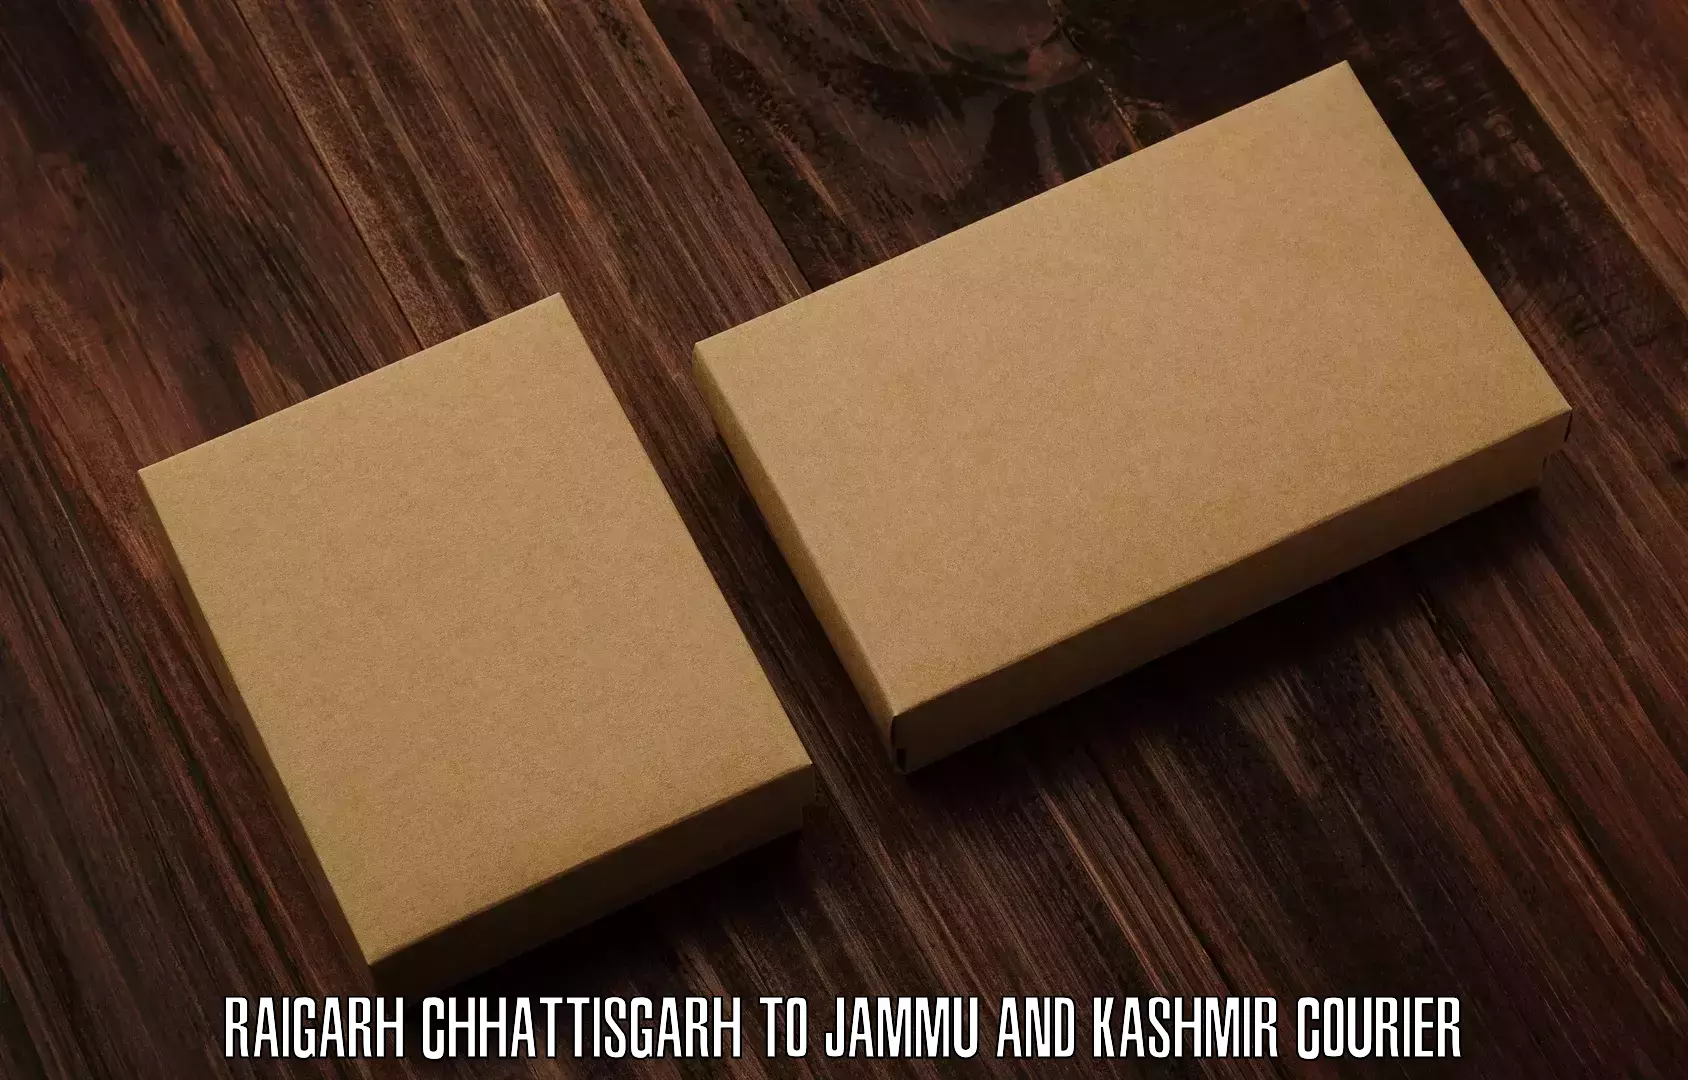 Global courier networks Raigarh Chhattisgarh to Jammu and Kashmir